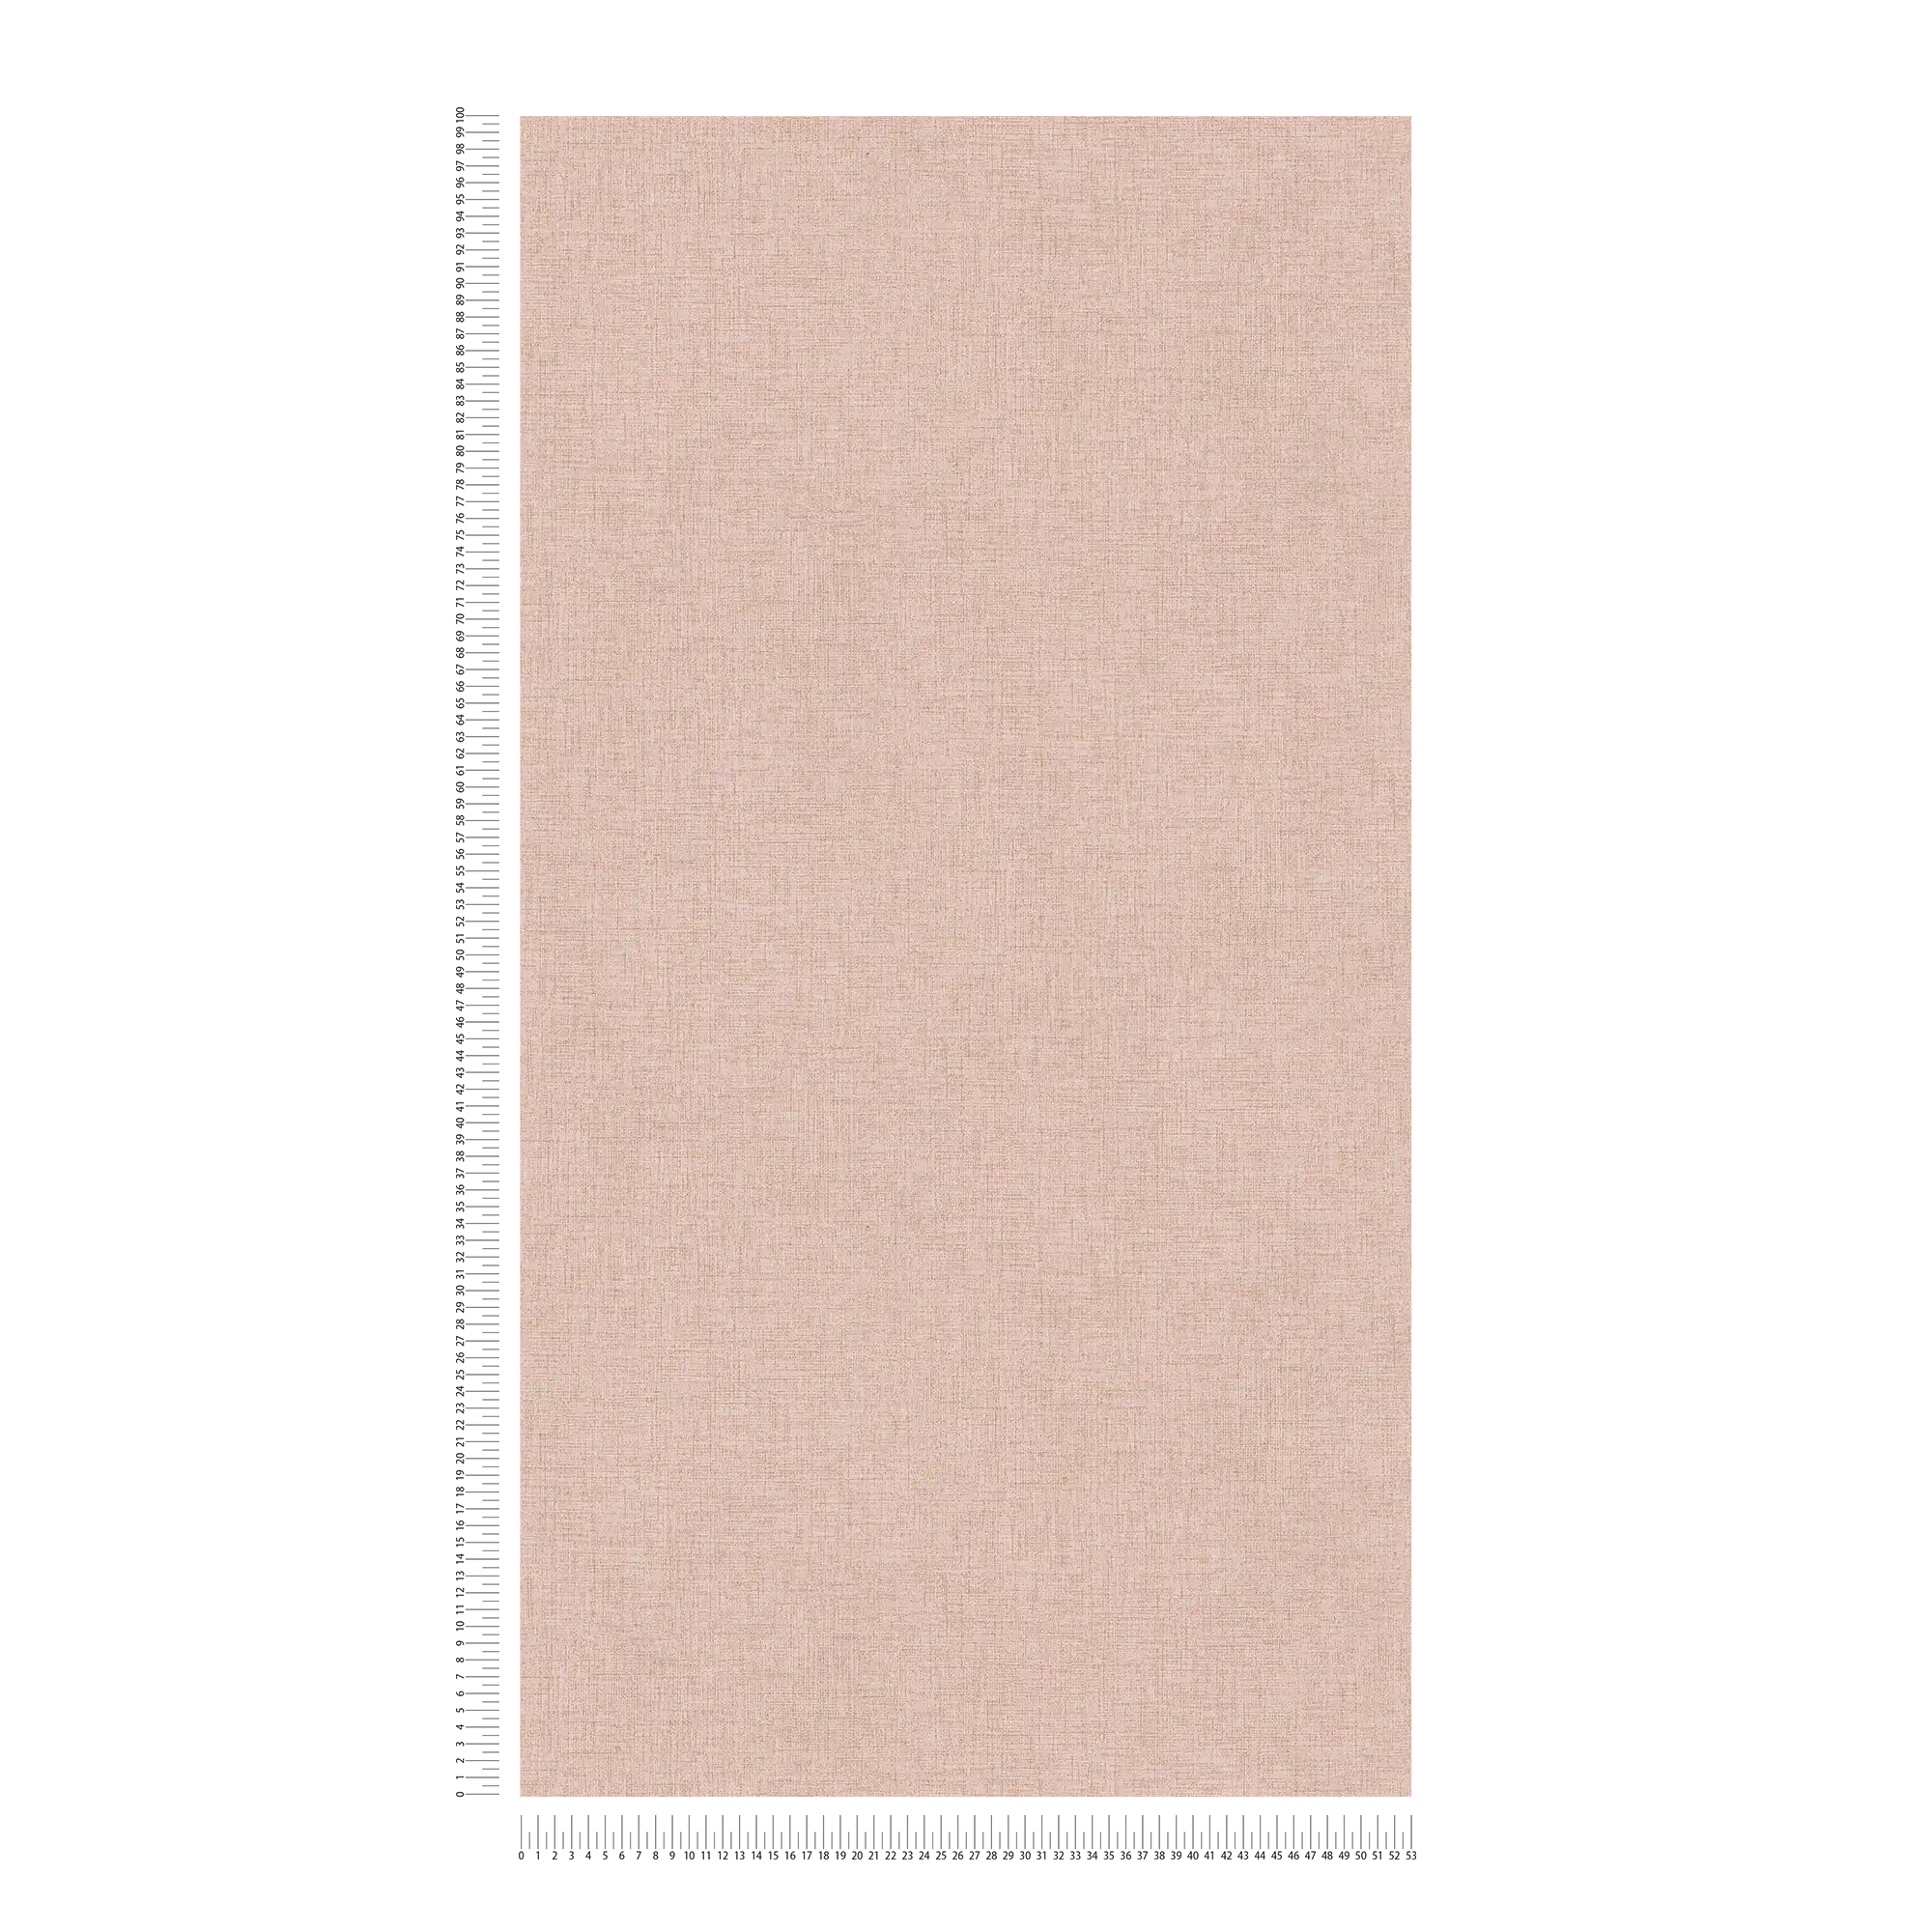             Plain wallpaper with subtle linen look - pink
        